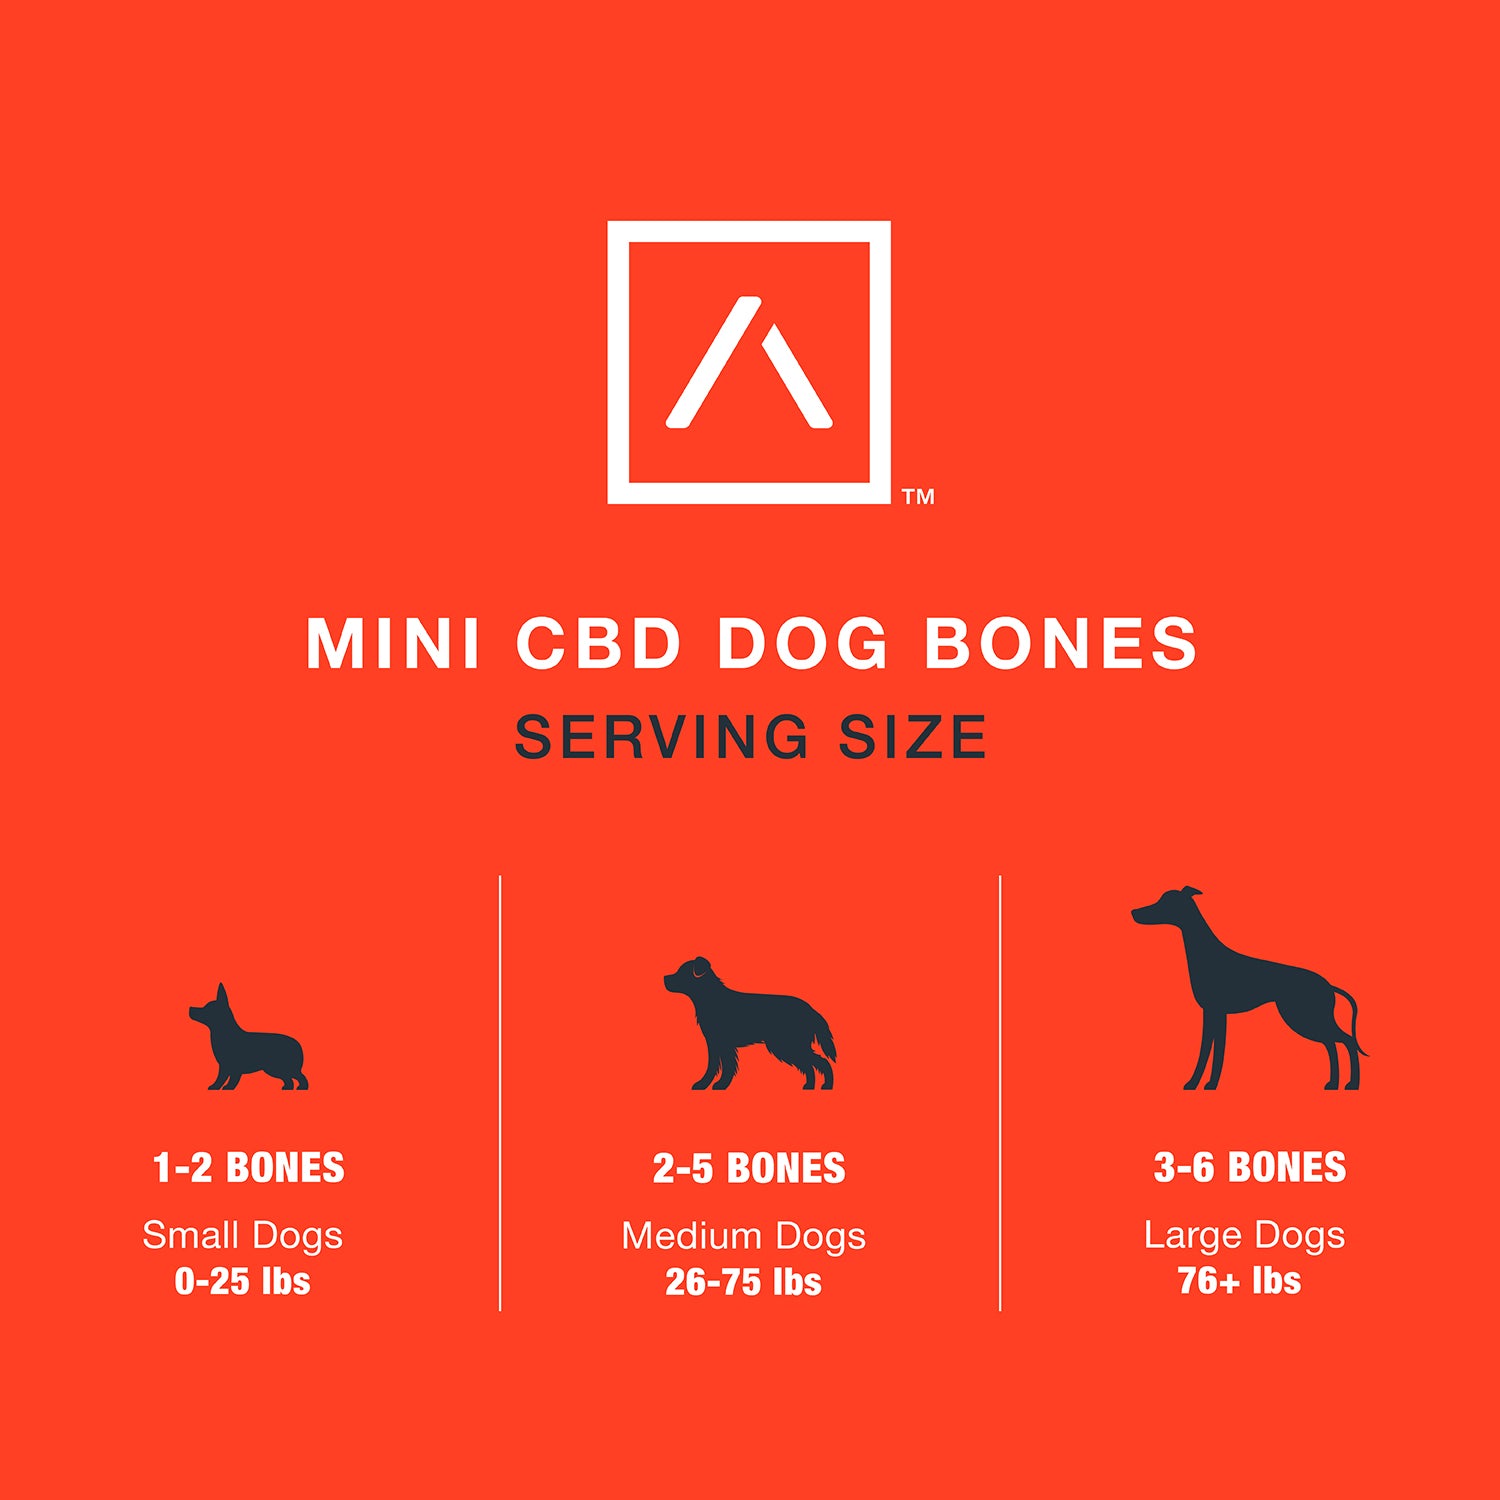 Mini CBD Dog Bones 50MG Peanut Butter and Blueberry